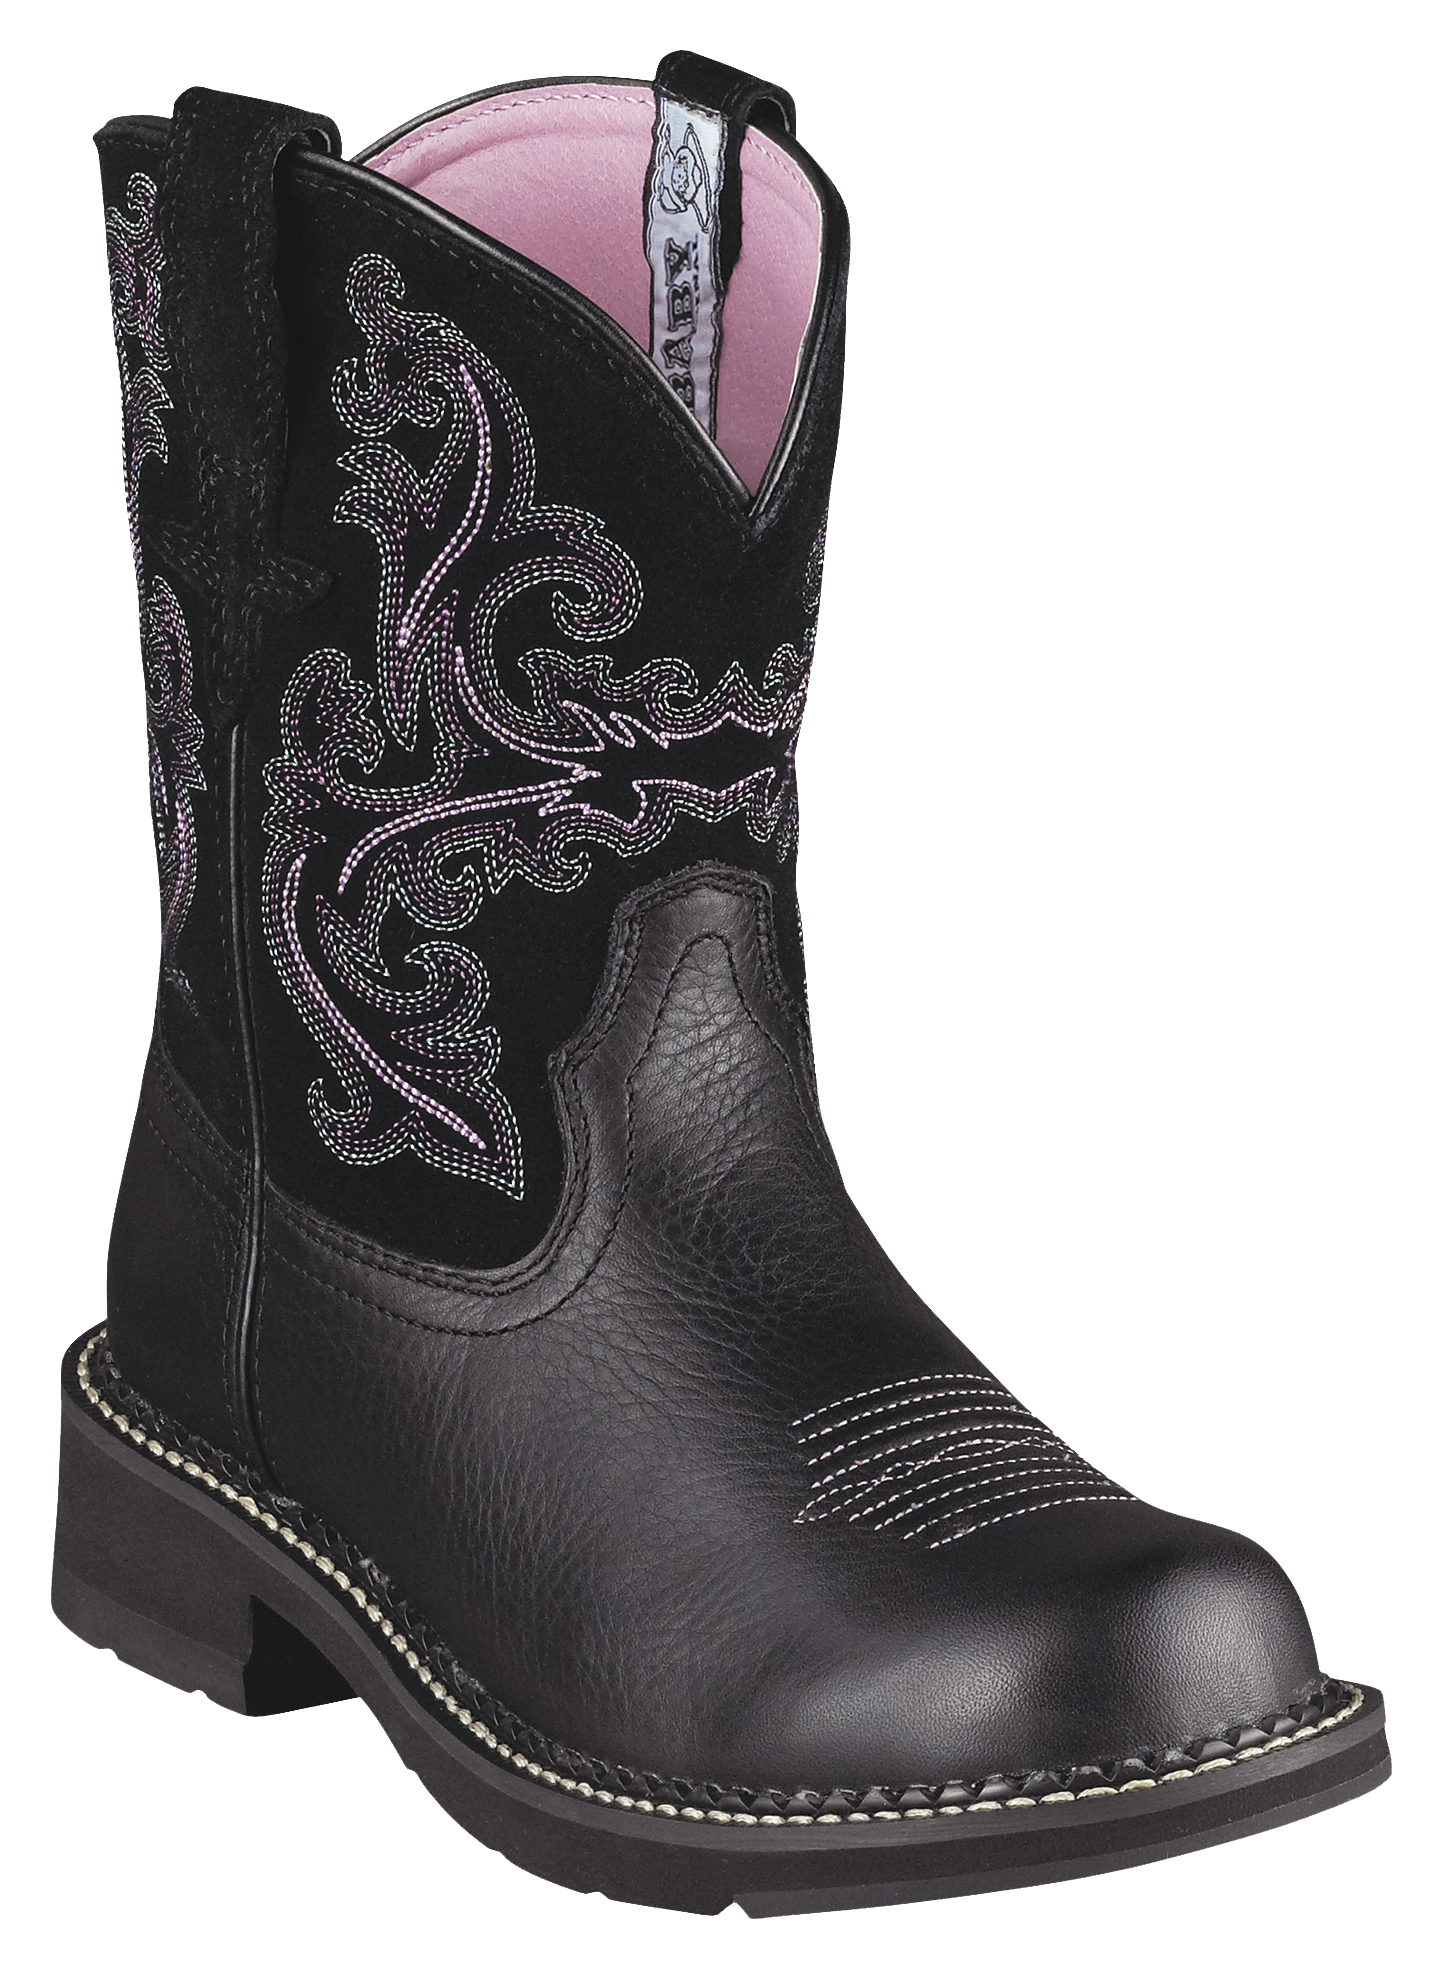 Ariat Fatbaby II Western Boots for Ladies - Black Deertan - 6 M